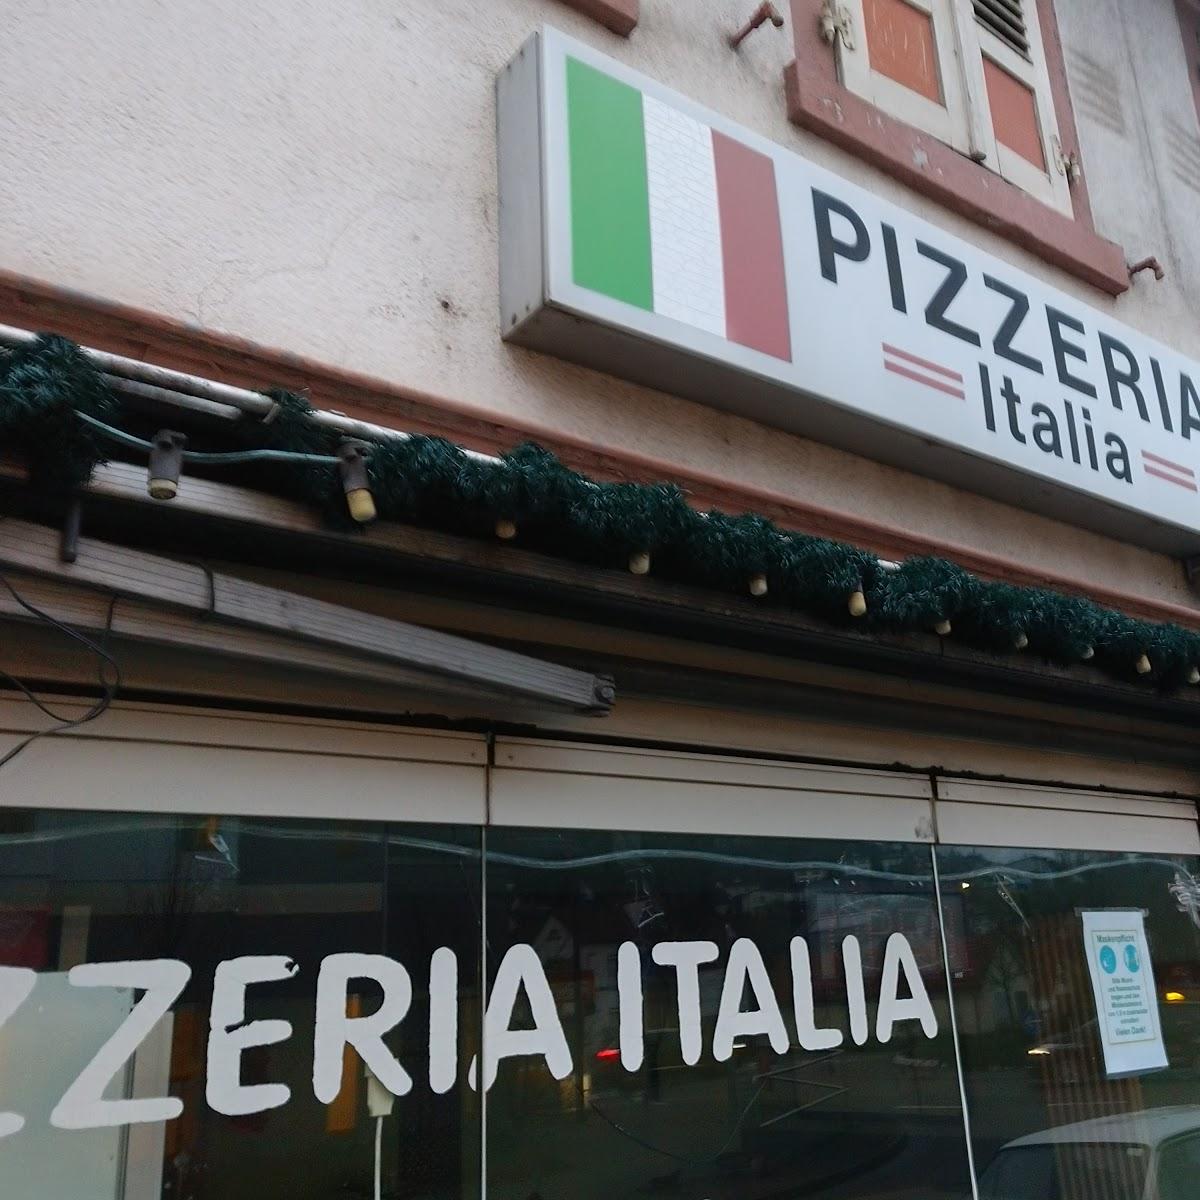 Restaurant "Pizzeria Italia" in Weinheim